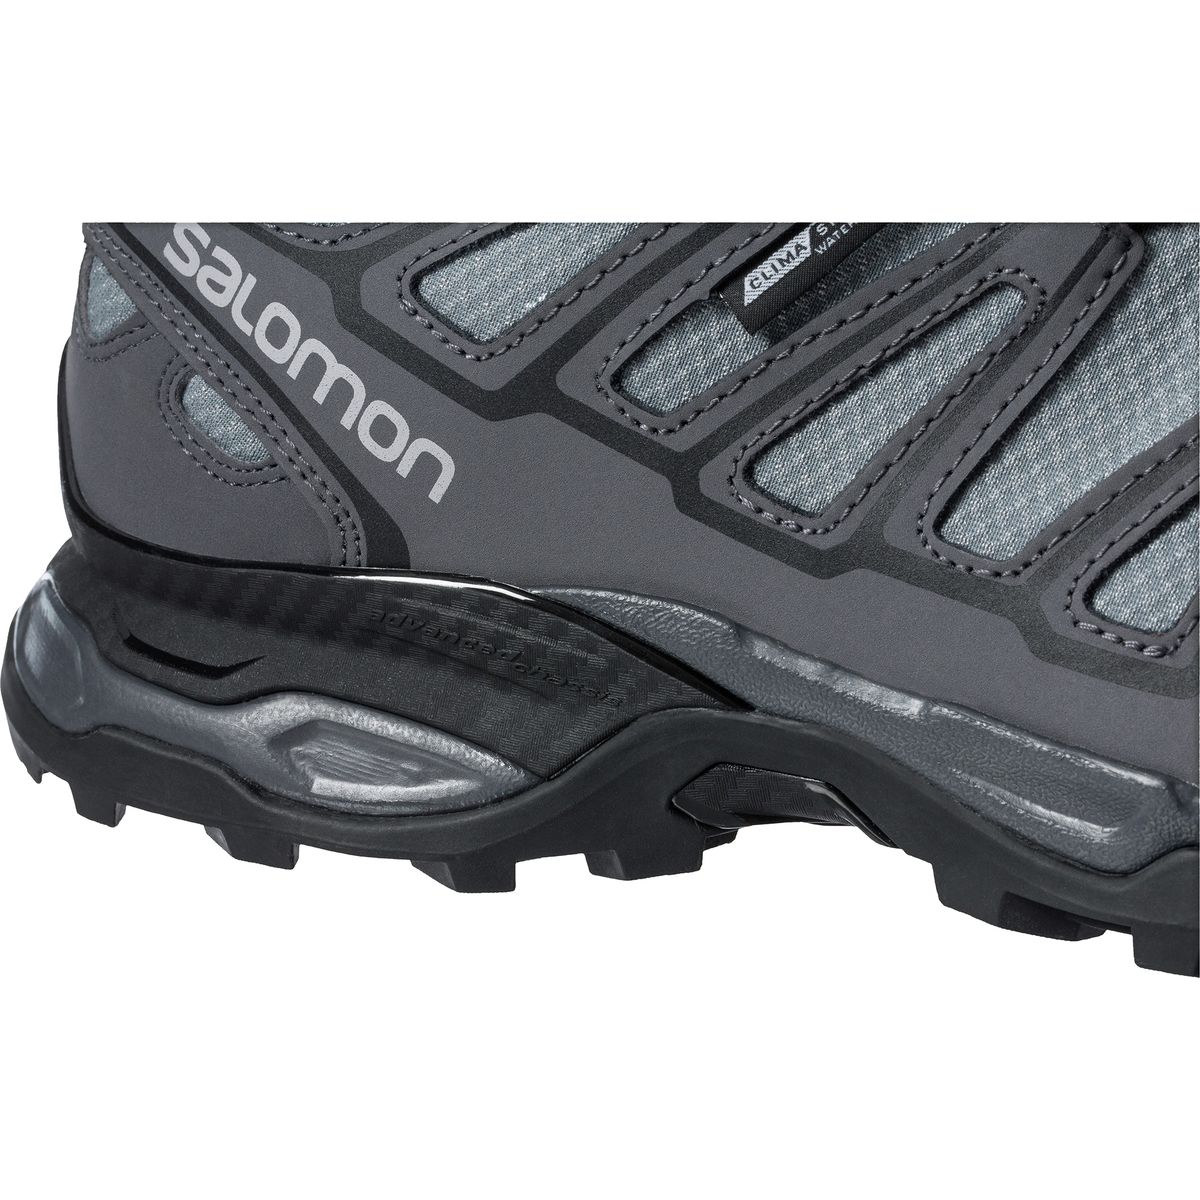 Namens Spreek luid Ontvangende machine Salomon X Ultra Prime CS WP Hiking Shoe - Men's - Footwear